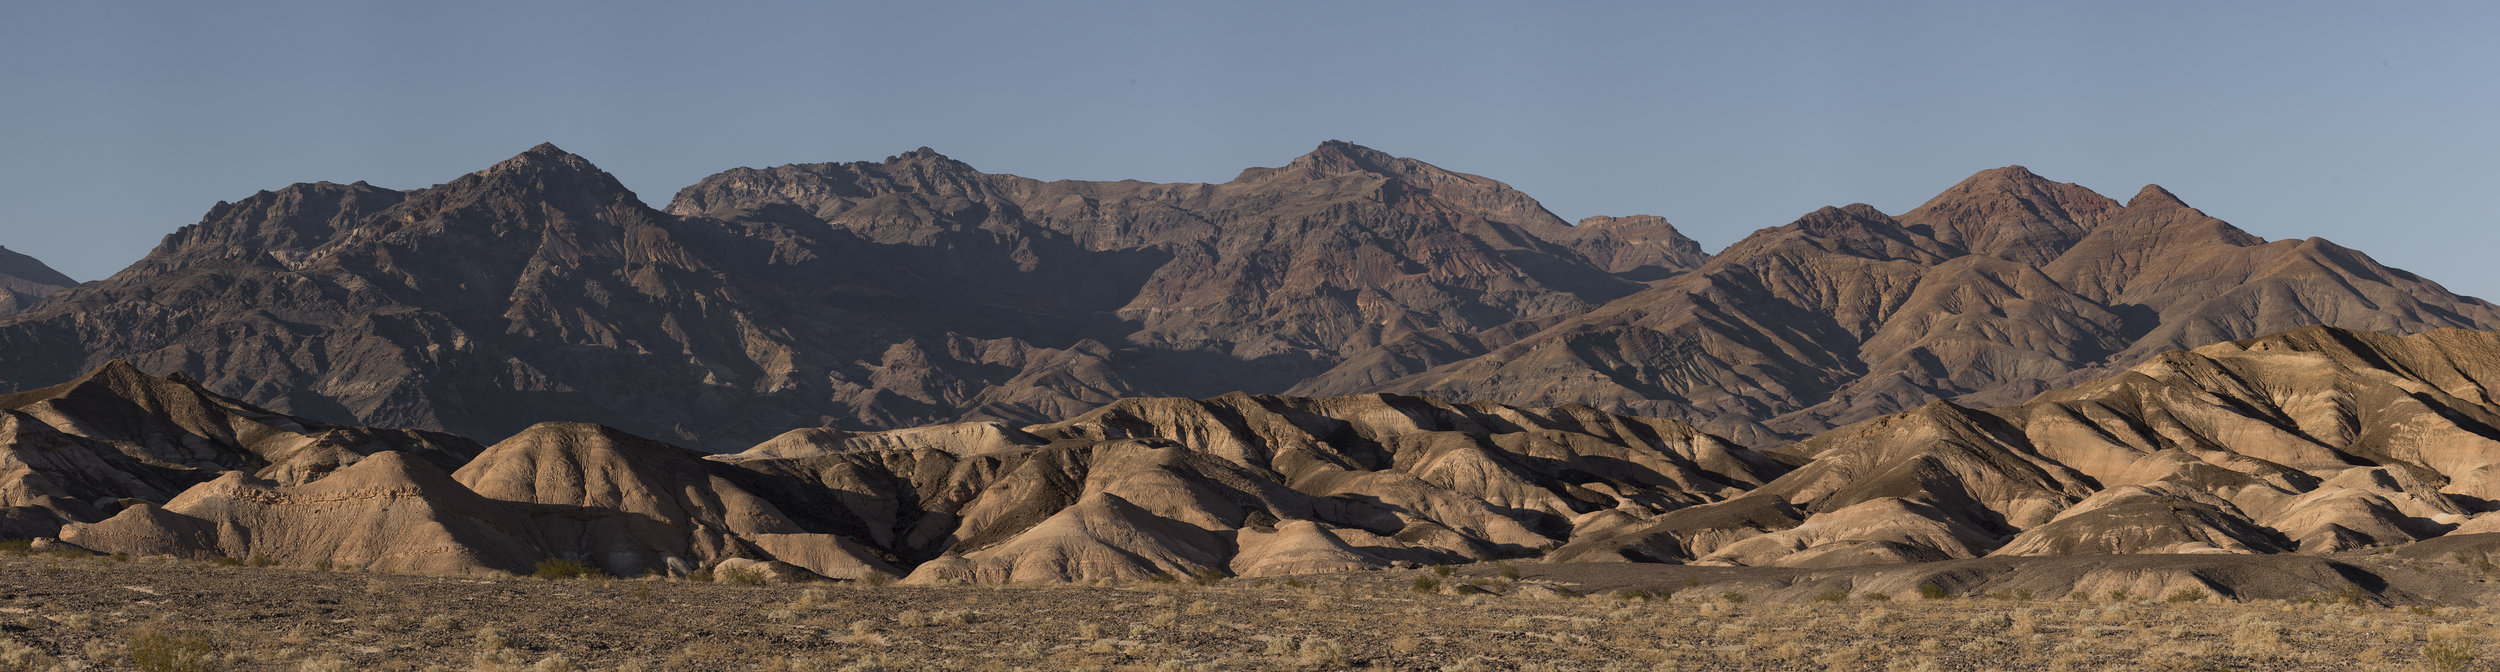 Death Valley II